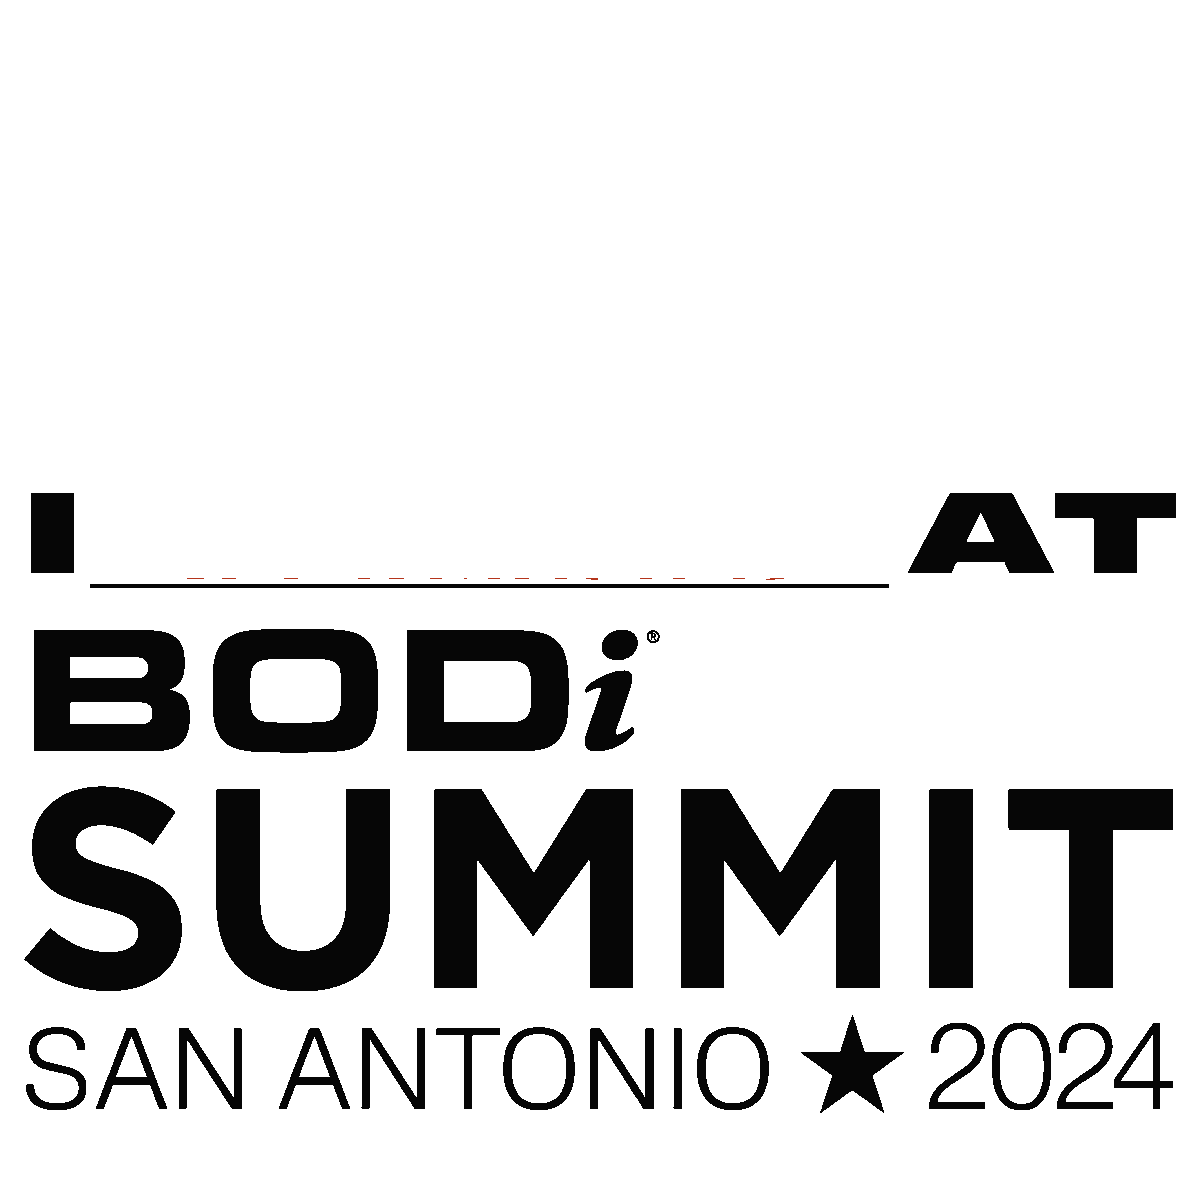 San Antonio Summit Sticker by BODi